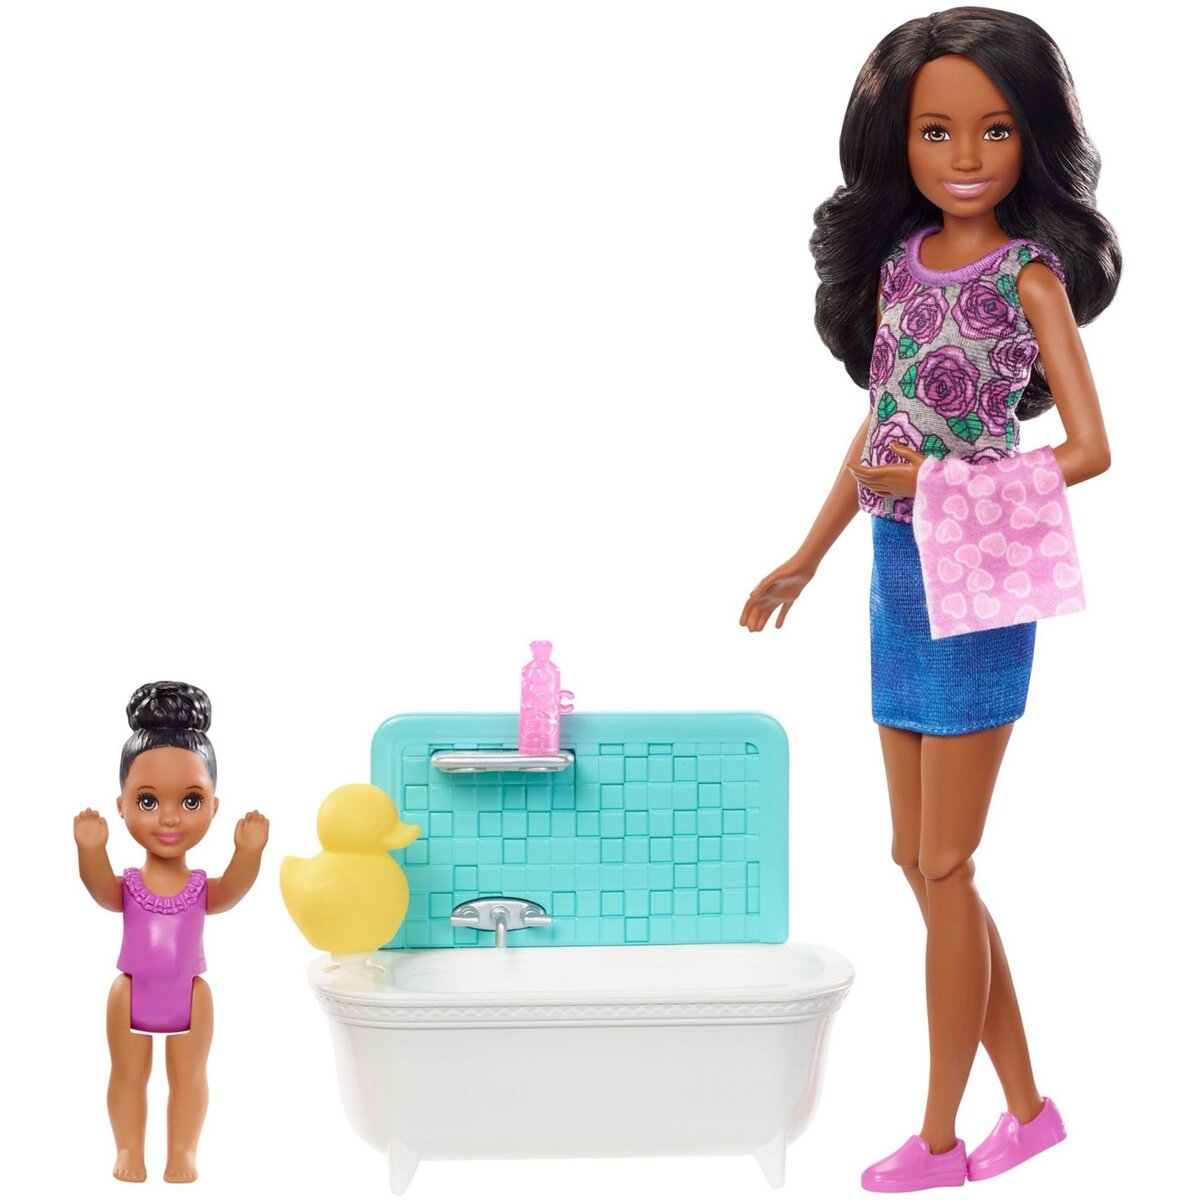 MATTEL Coffret babysitter et enfant - Heure du bain - Barbie 